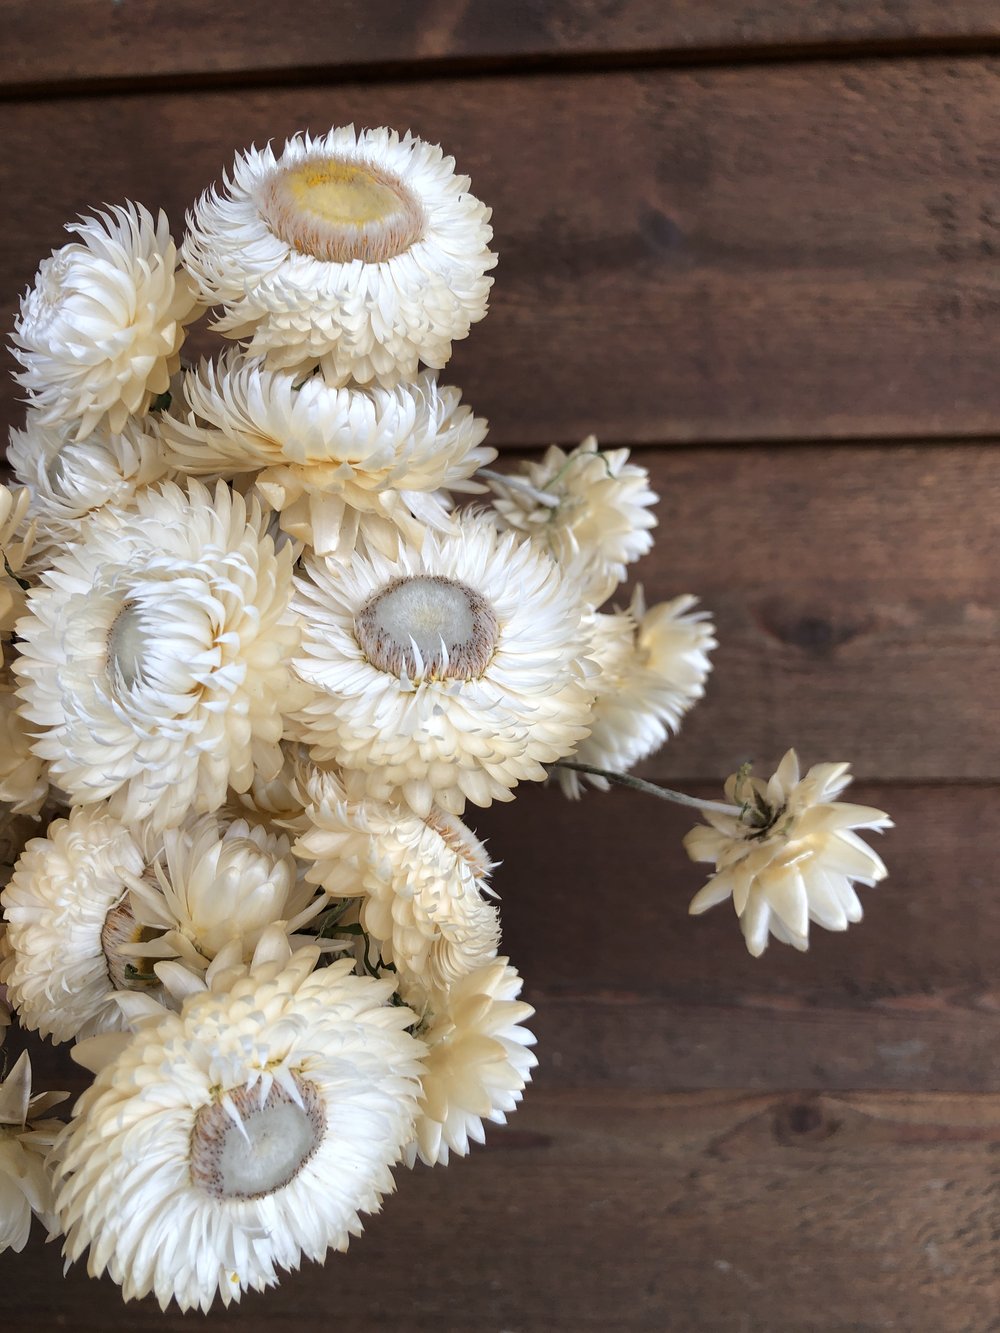 Strawflowers (Helichrysum) - Cream - Dried Flowers - DIY – Dried Flowers  Forever